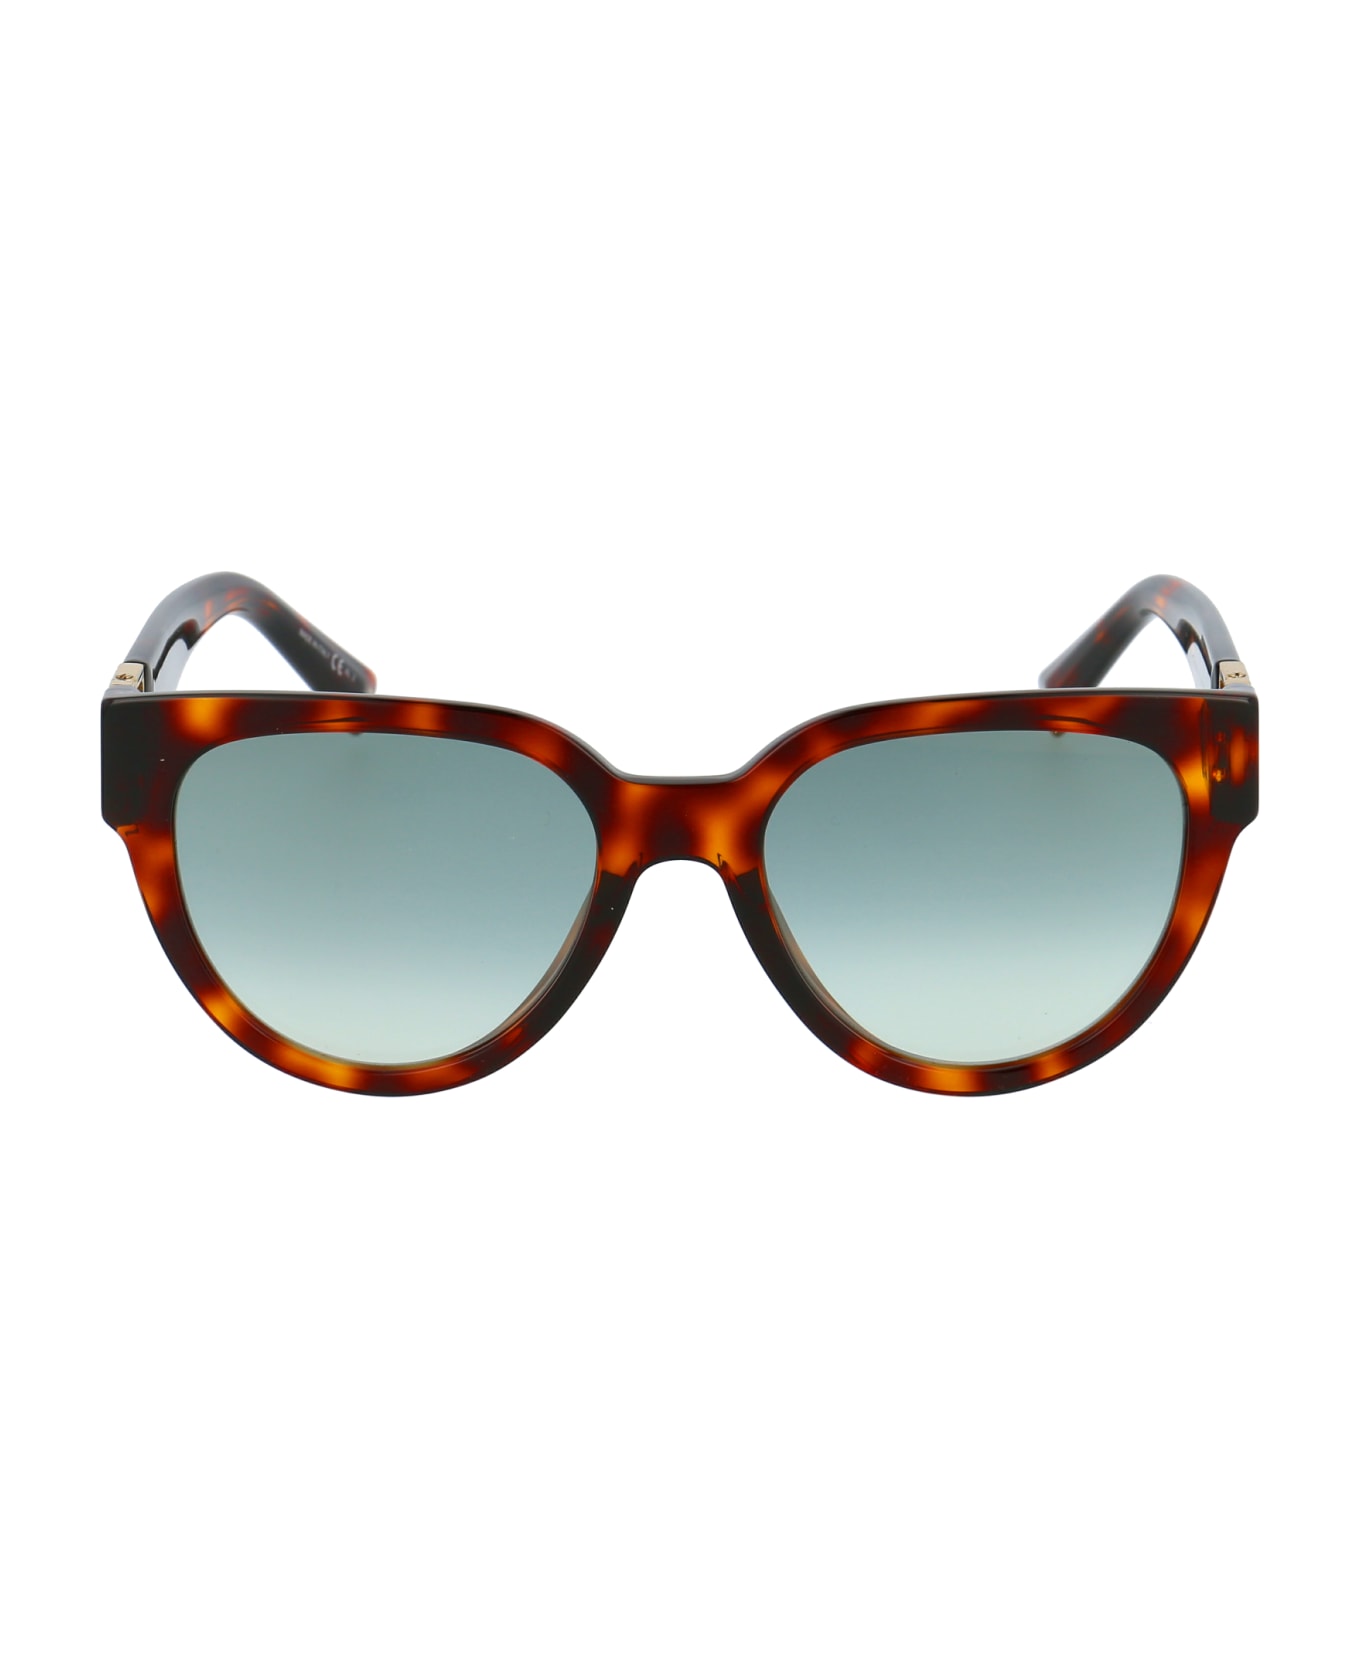 Givenchy Eyewear Gv 7155/g/s Sunglasses - 0UCEZ RED HAVNA サングラス